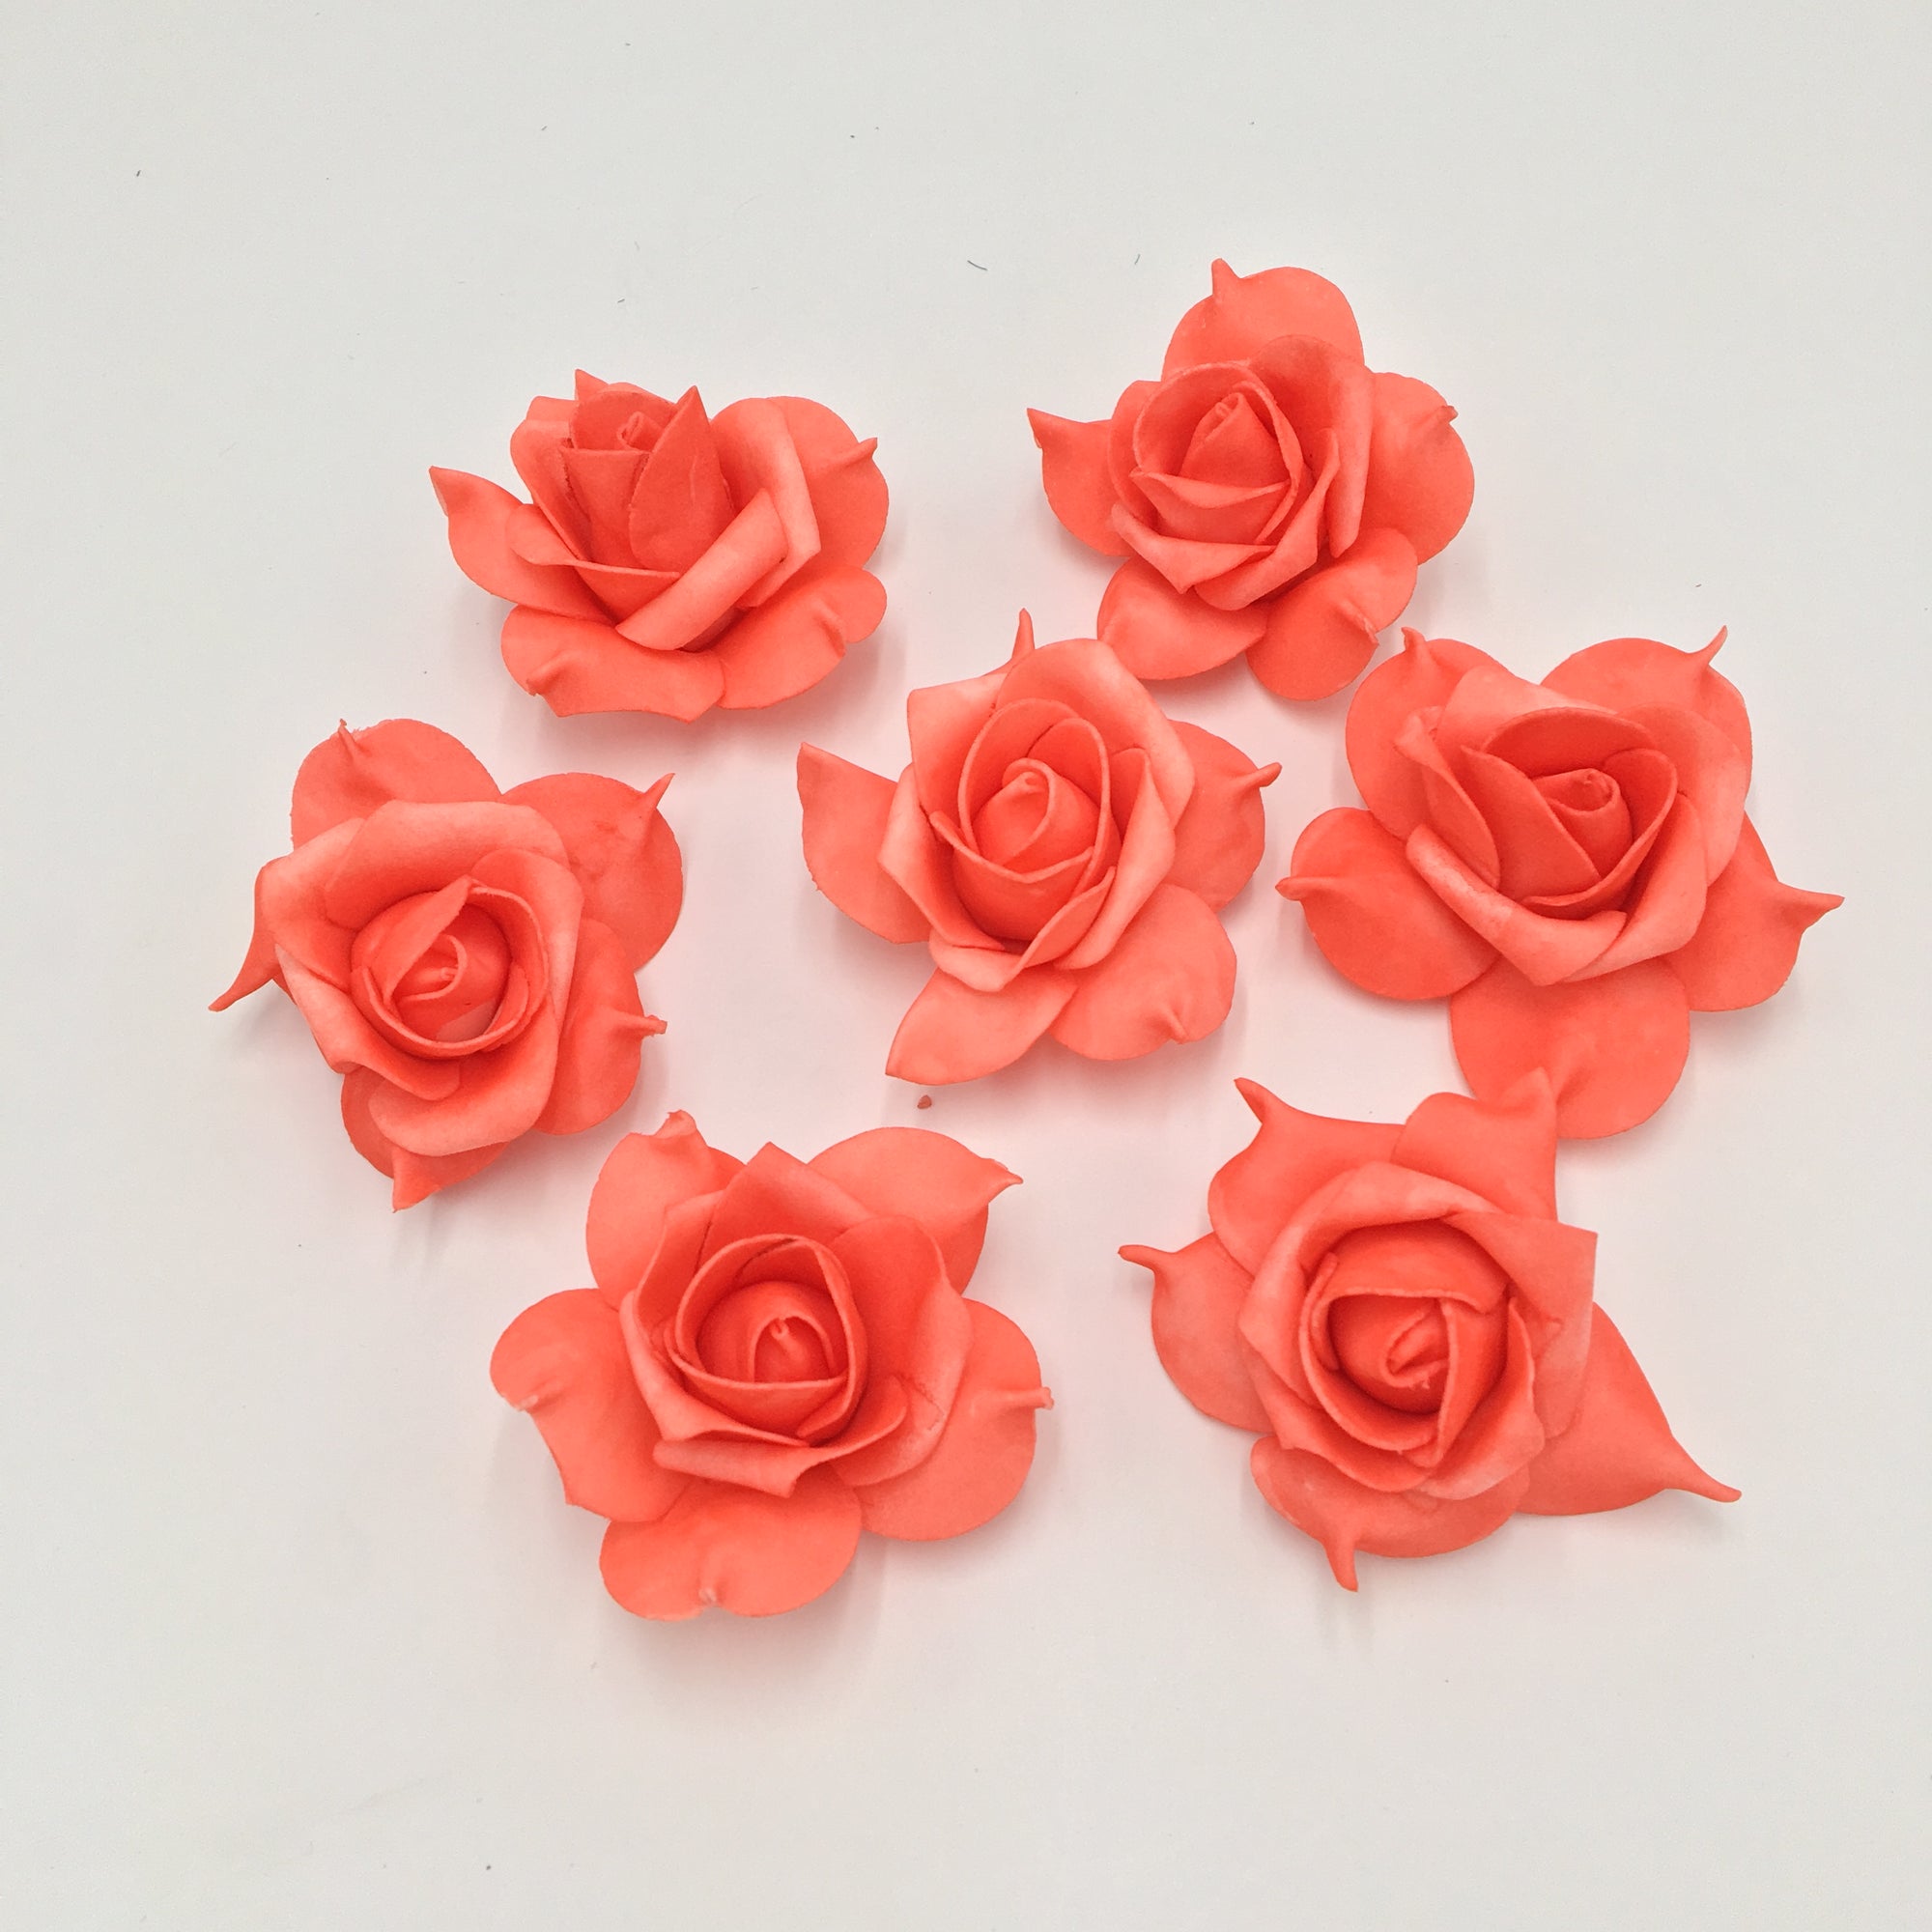 Bulk Flowers Heads Artificial Roses Wholesale 100 pcs for DIY Flower Balls